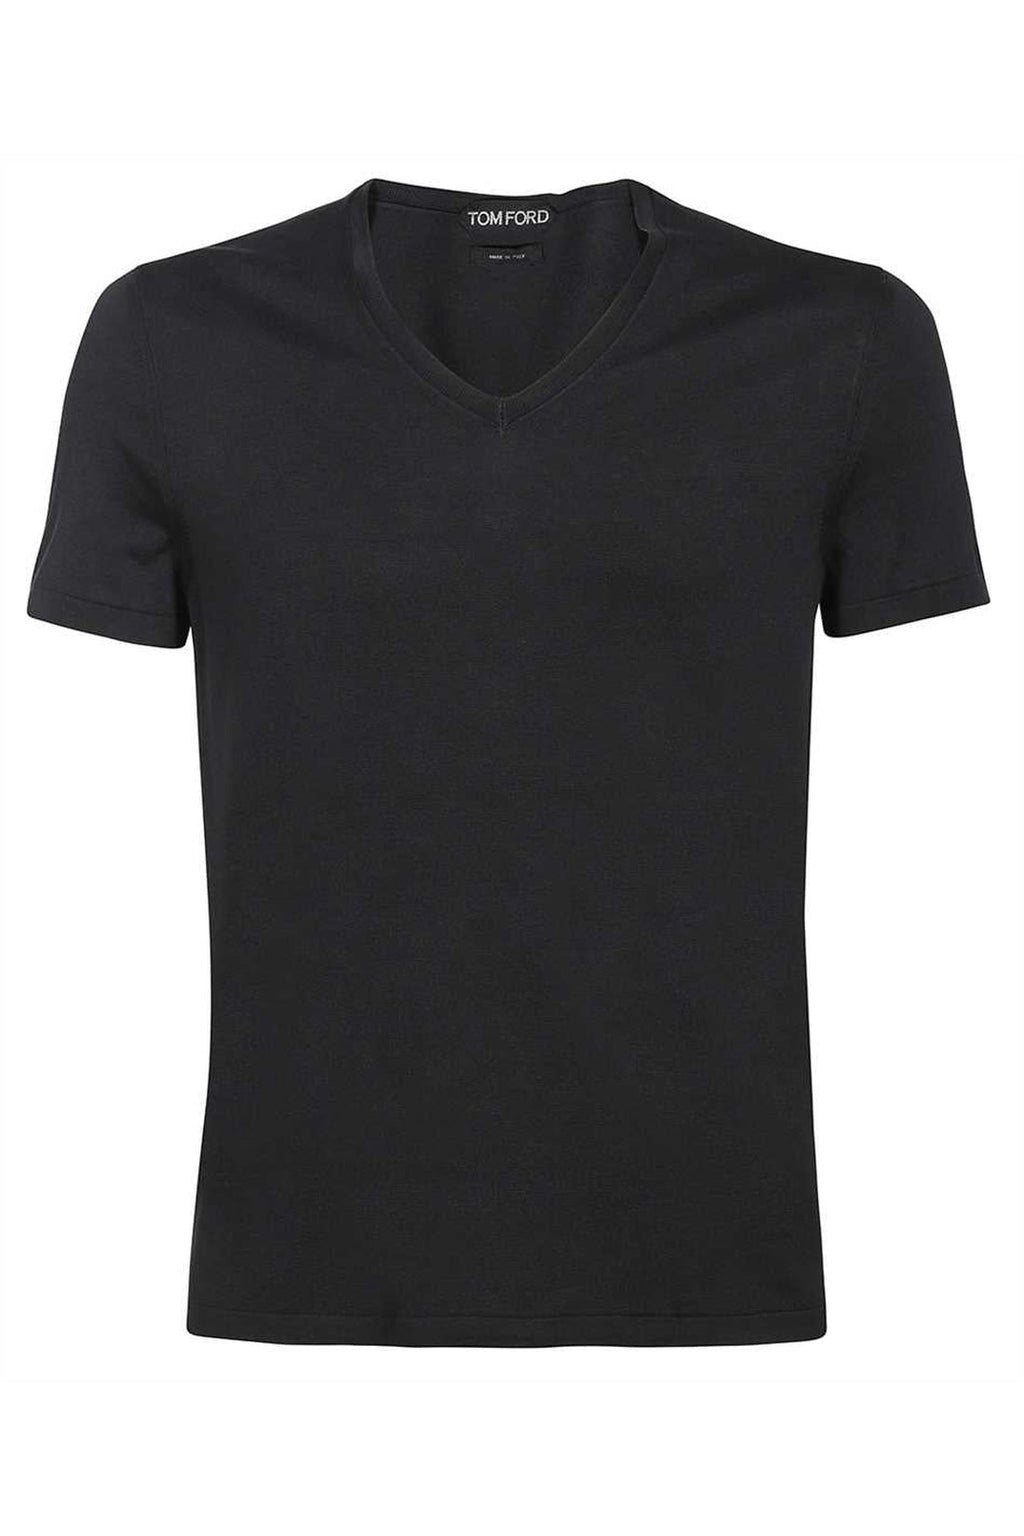 Tom Ford-OUTLET-SALE-Silk-cotton blend T-shirt-ARCHIVIST